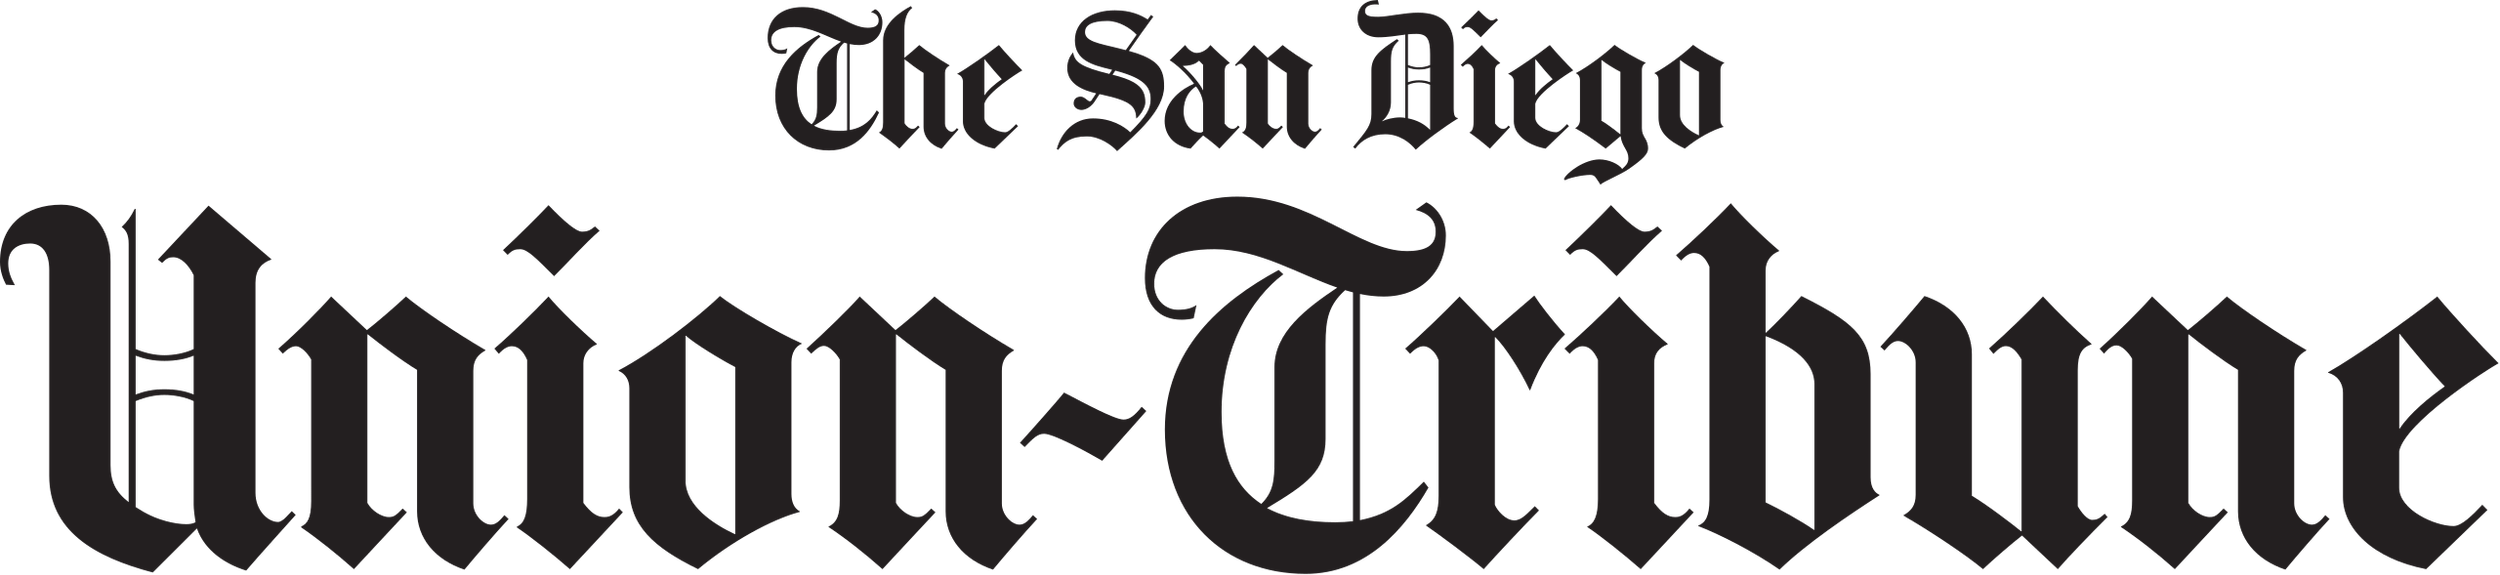 The_San_Diego_Union-Tribune.svg.png